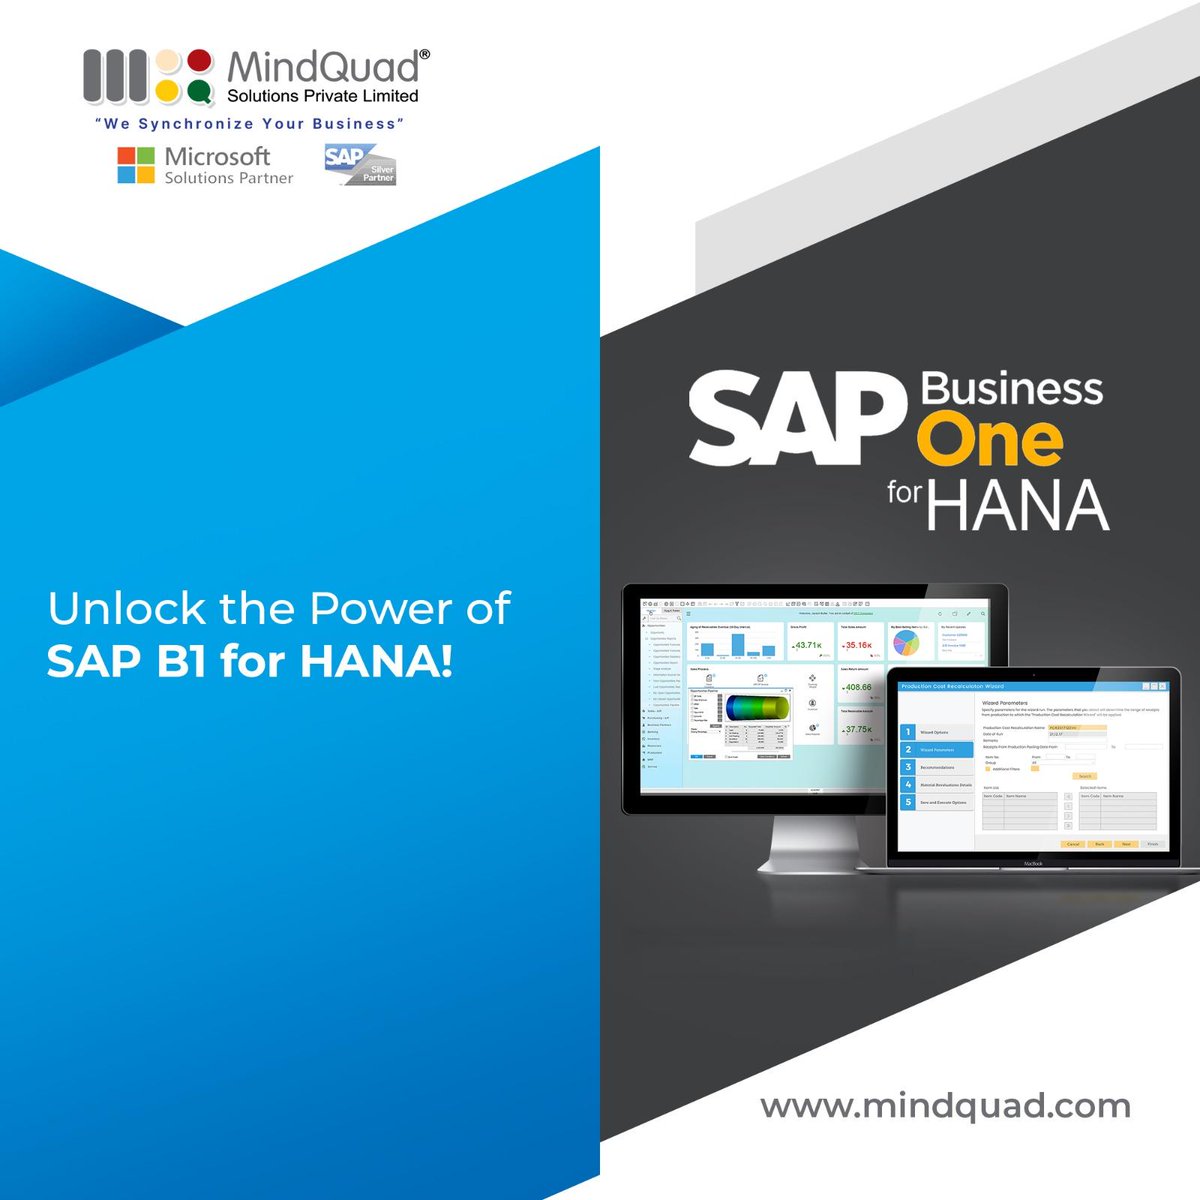 ✨Unlock the Power of SAP B1 for HANA! ✨

Drop your inquiries: info@mindquad.com

#MindQuad #TechQuad #SAPBusinessOne #HANA #RealTimeInsights #Scalability #BusinessSolutions #Innovation